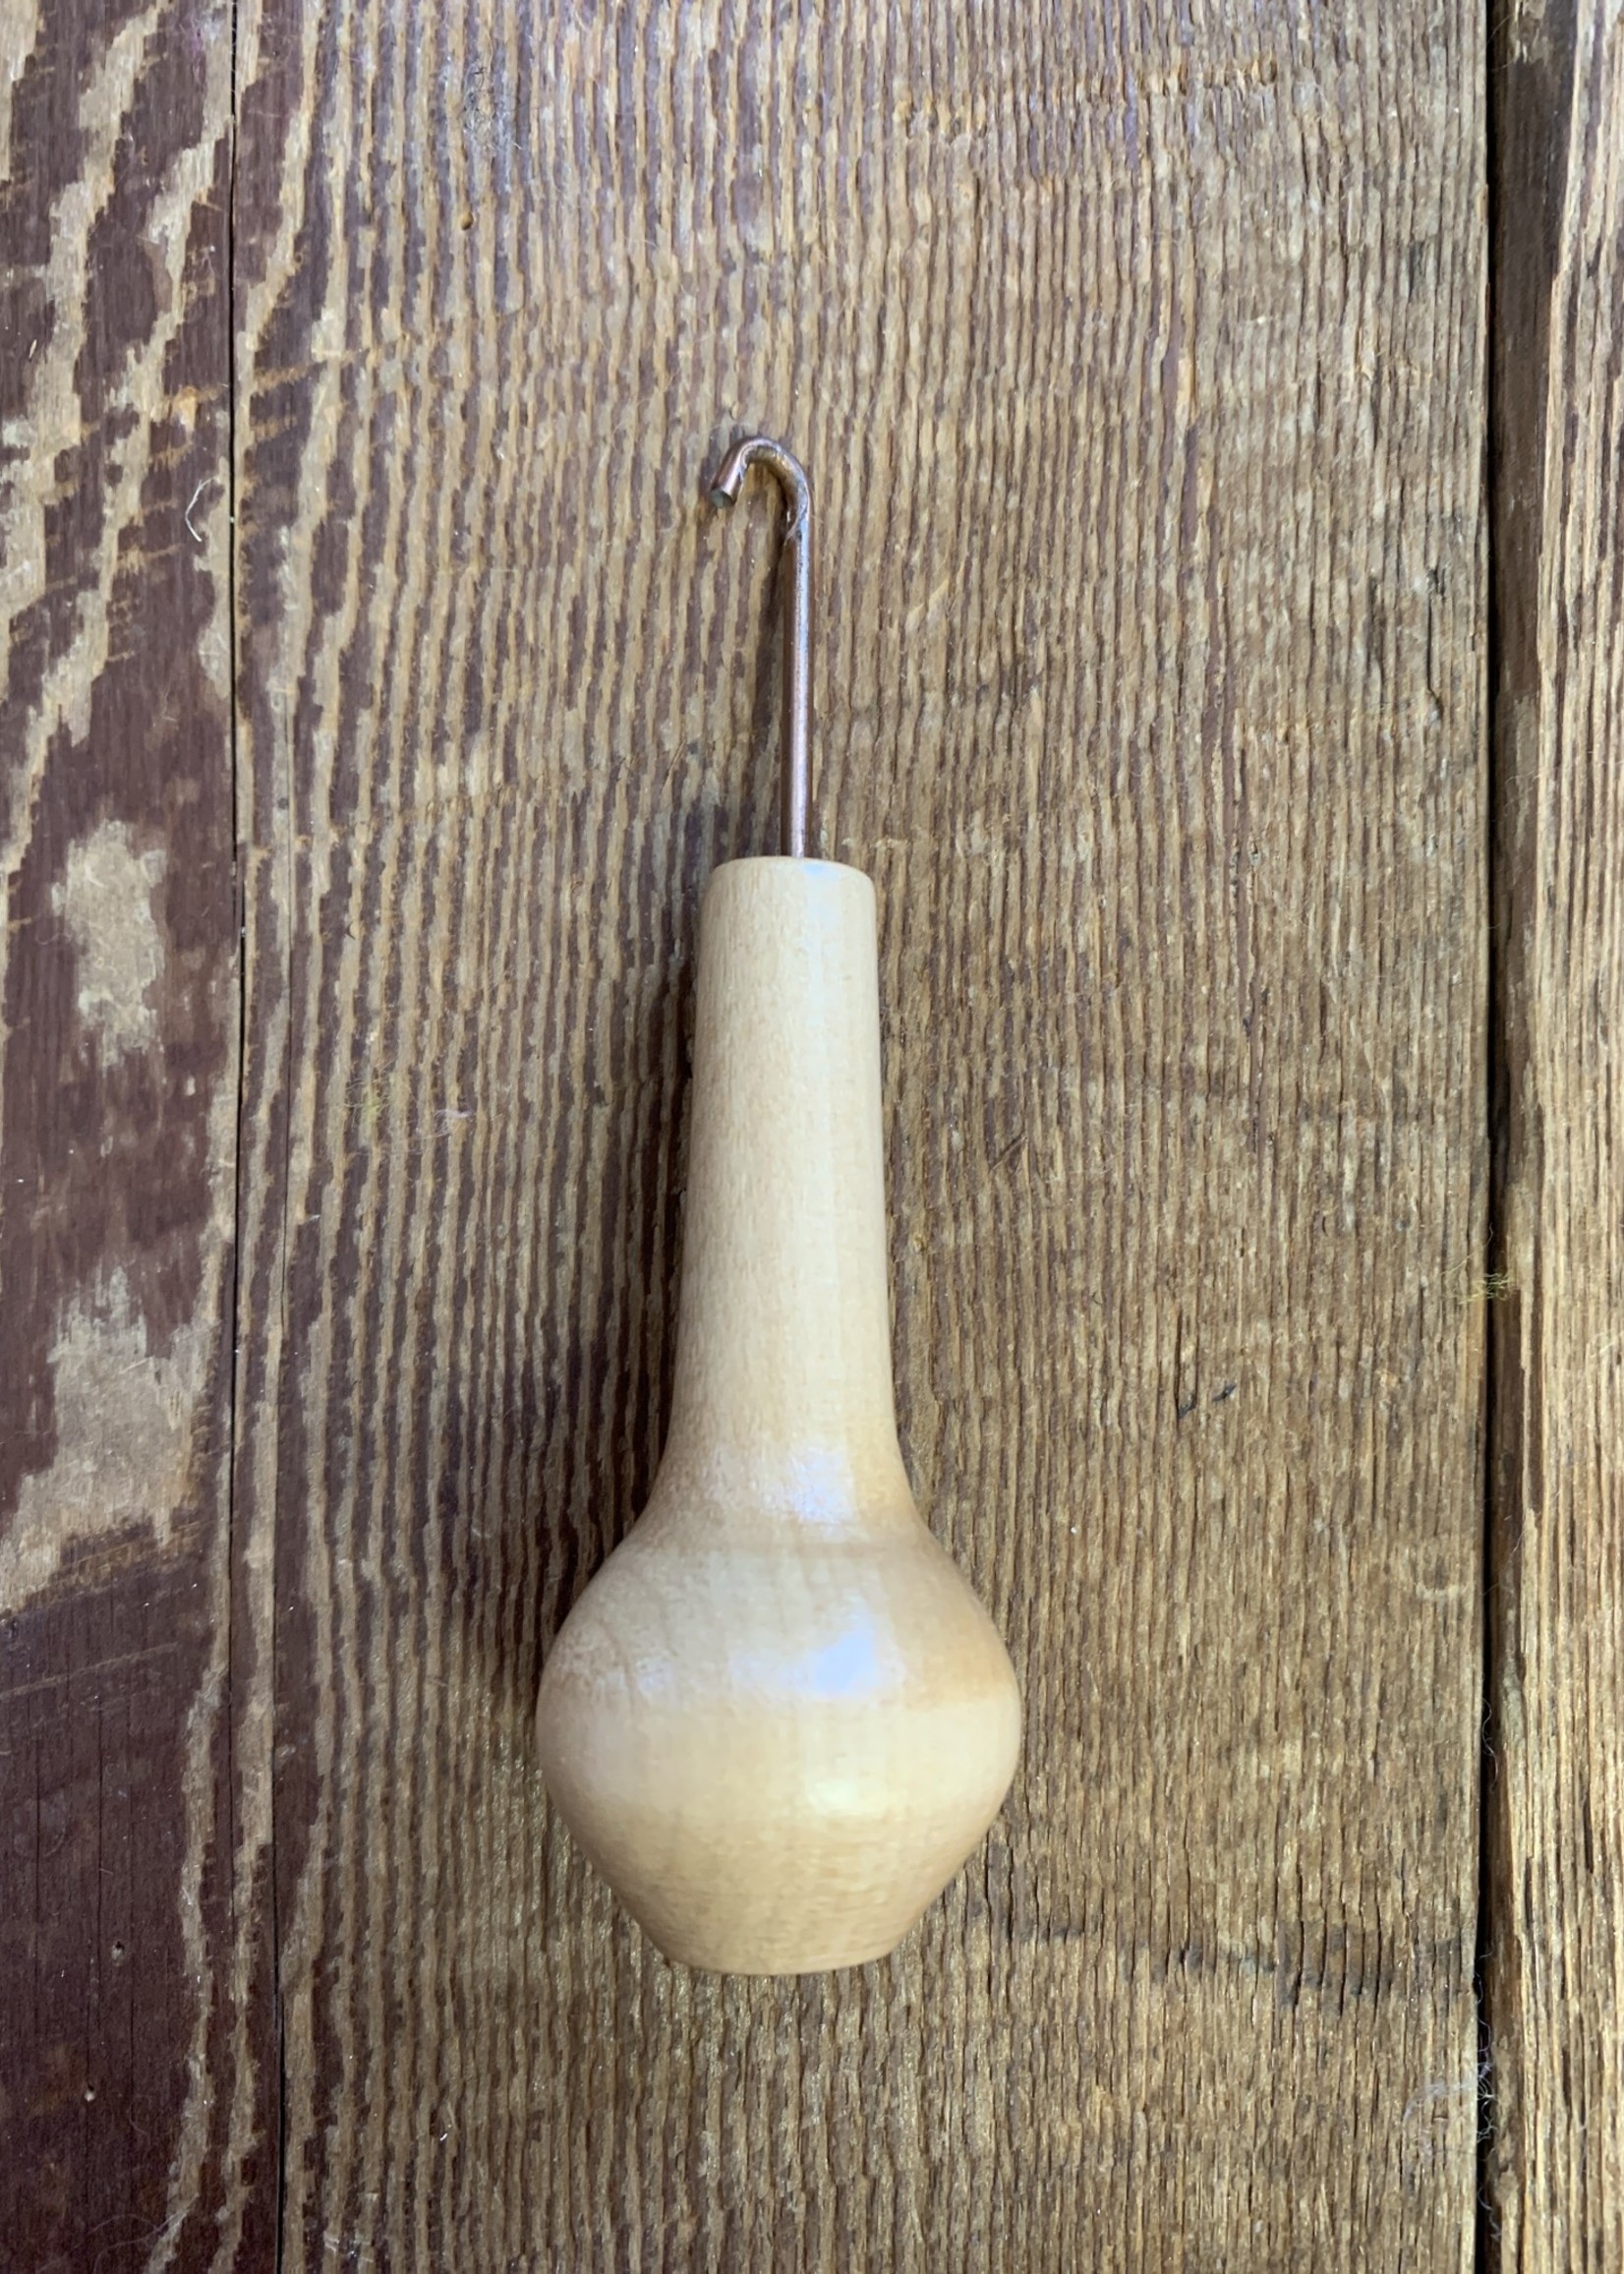 Ashford Threading Hook, wood knob with wire hook